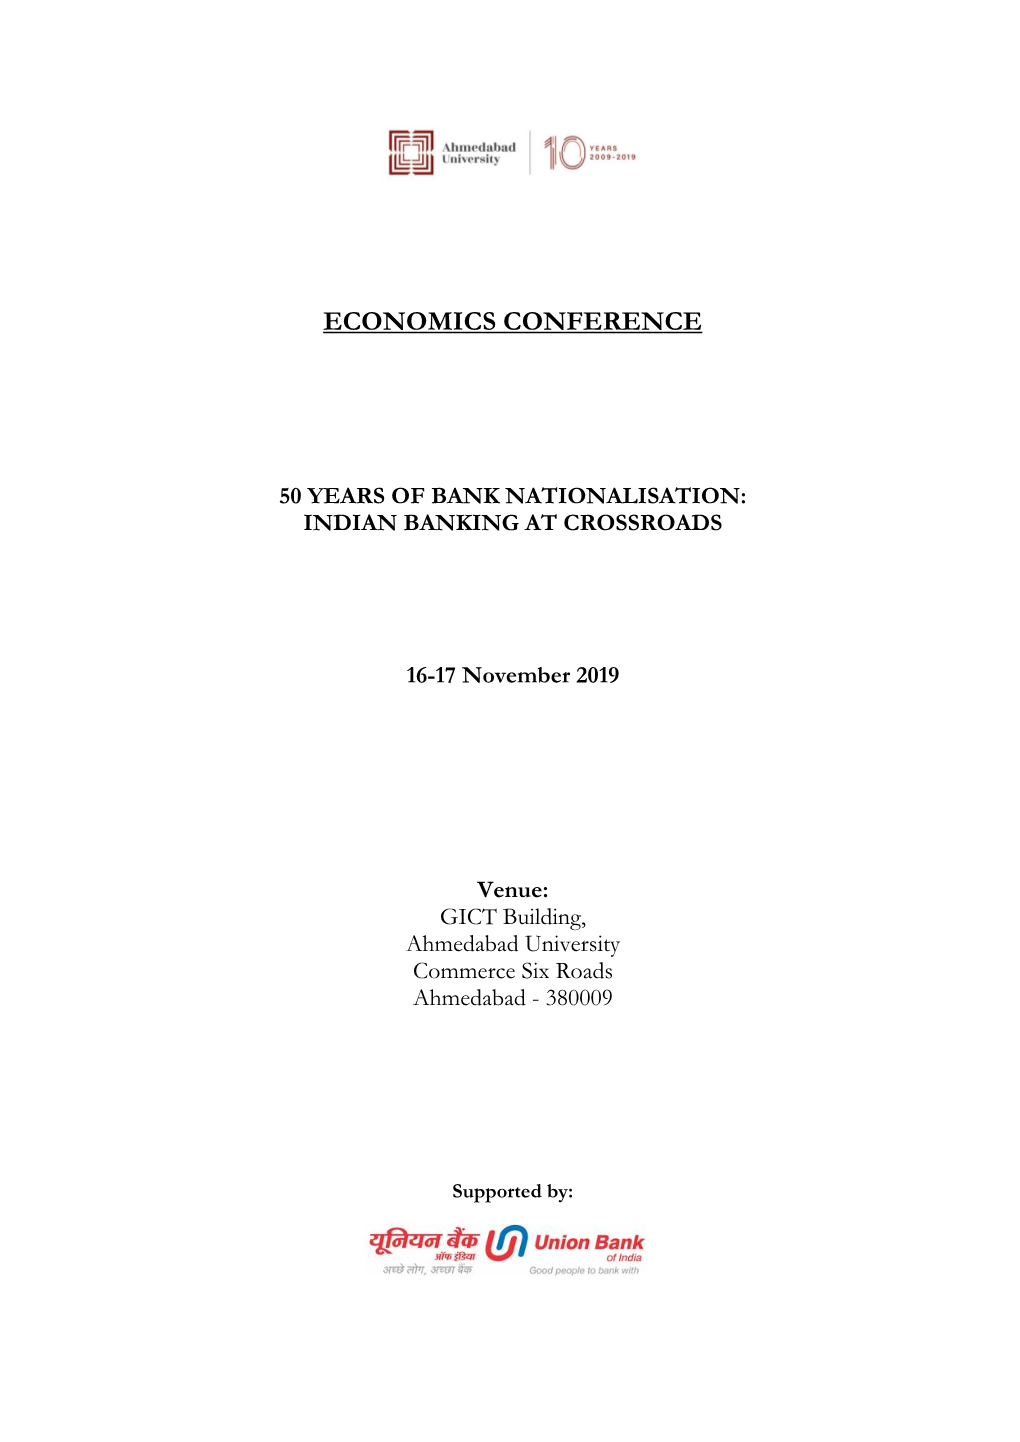 Economics Conference